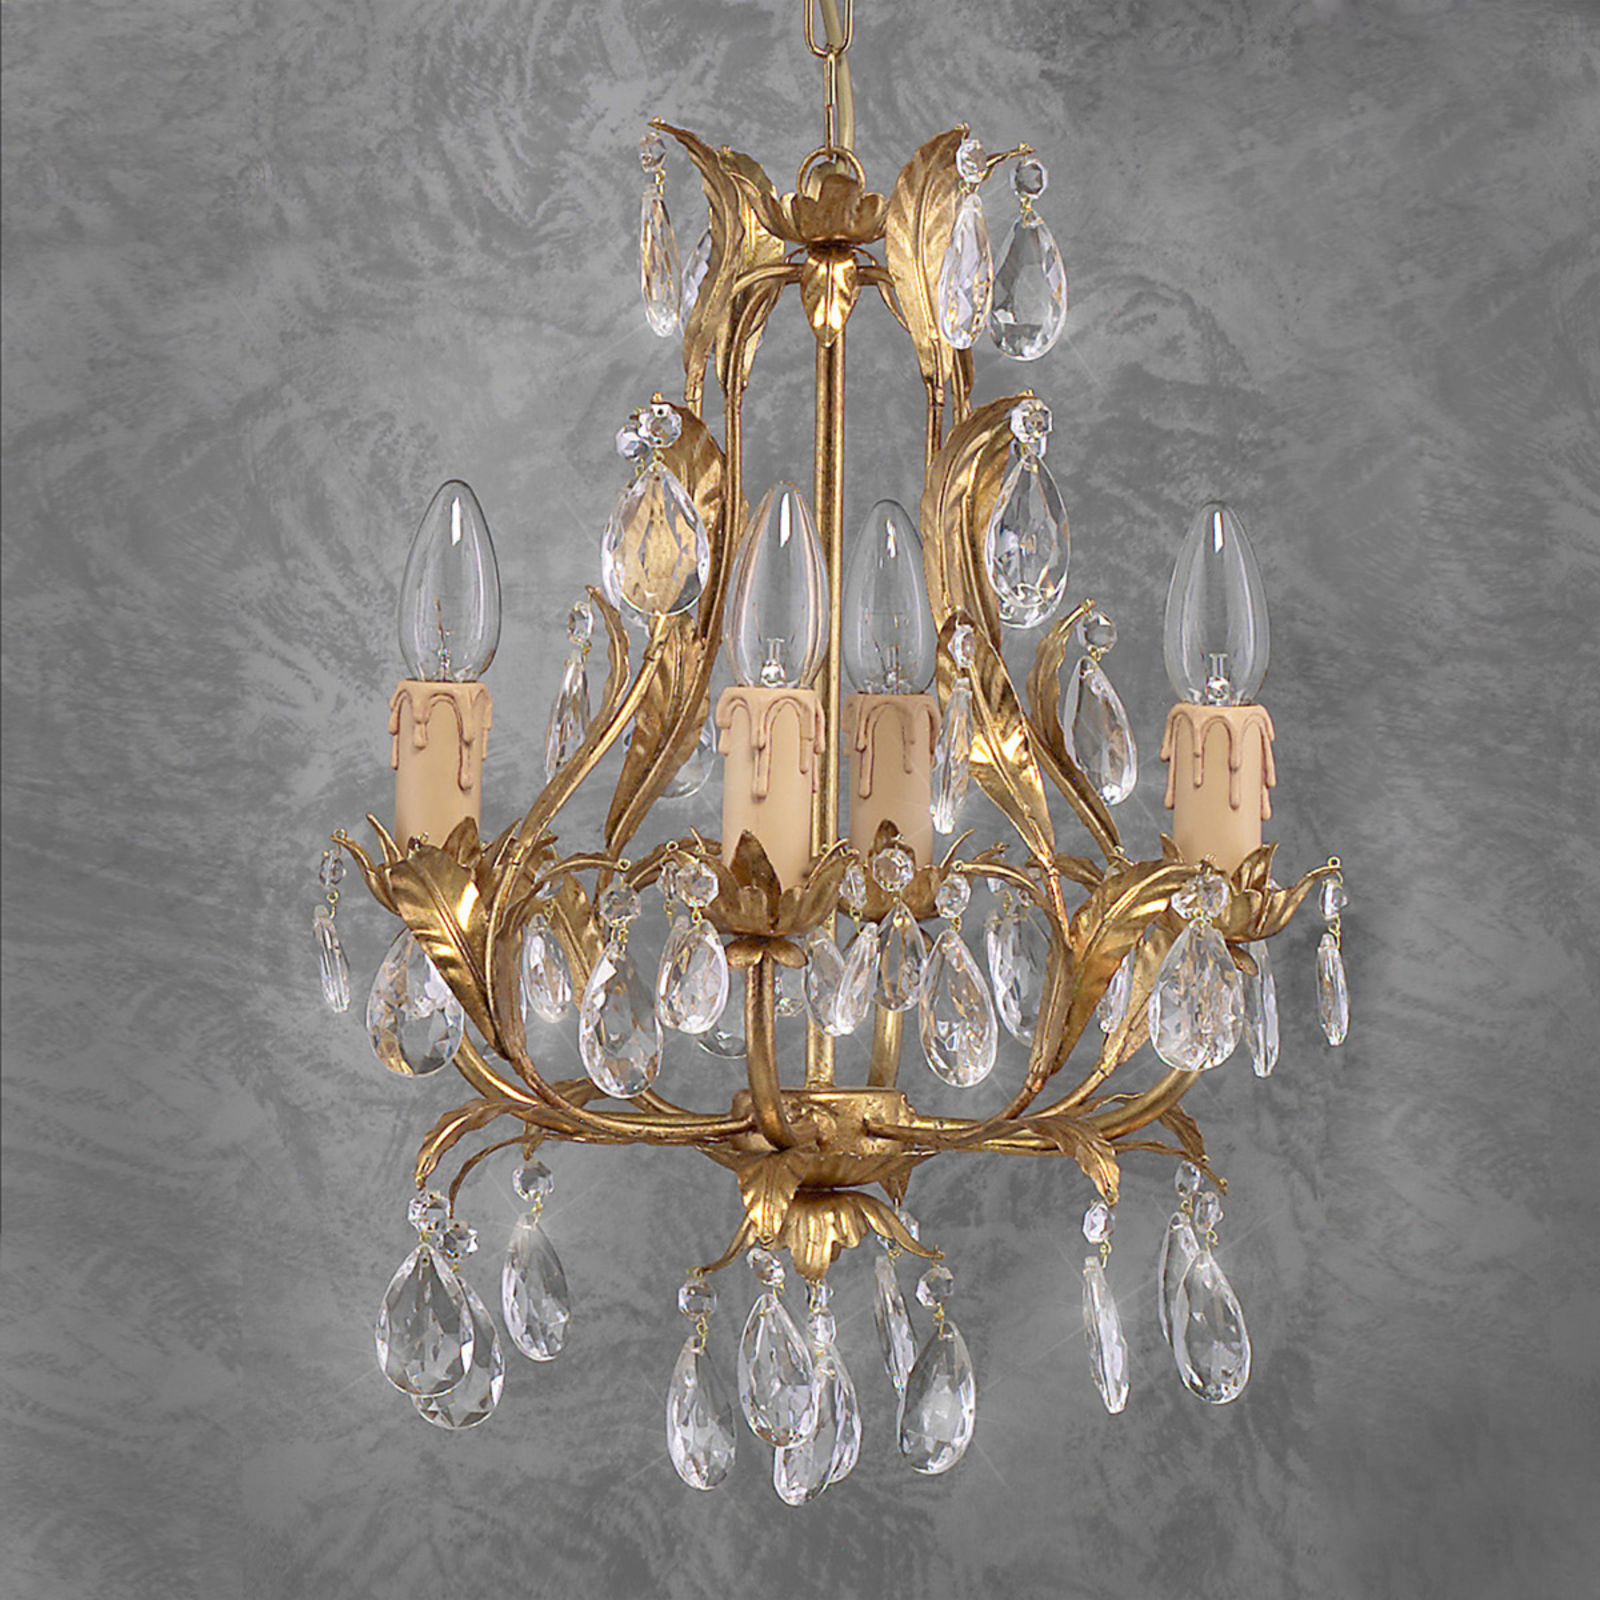 PISA noble chandelier gold lead crystal